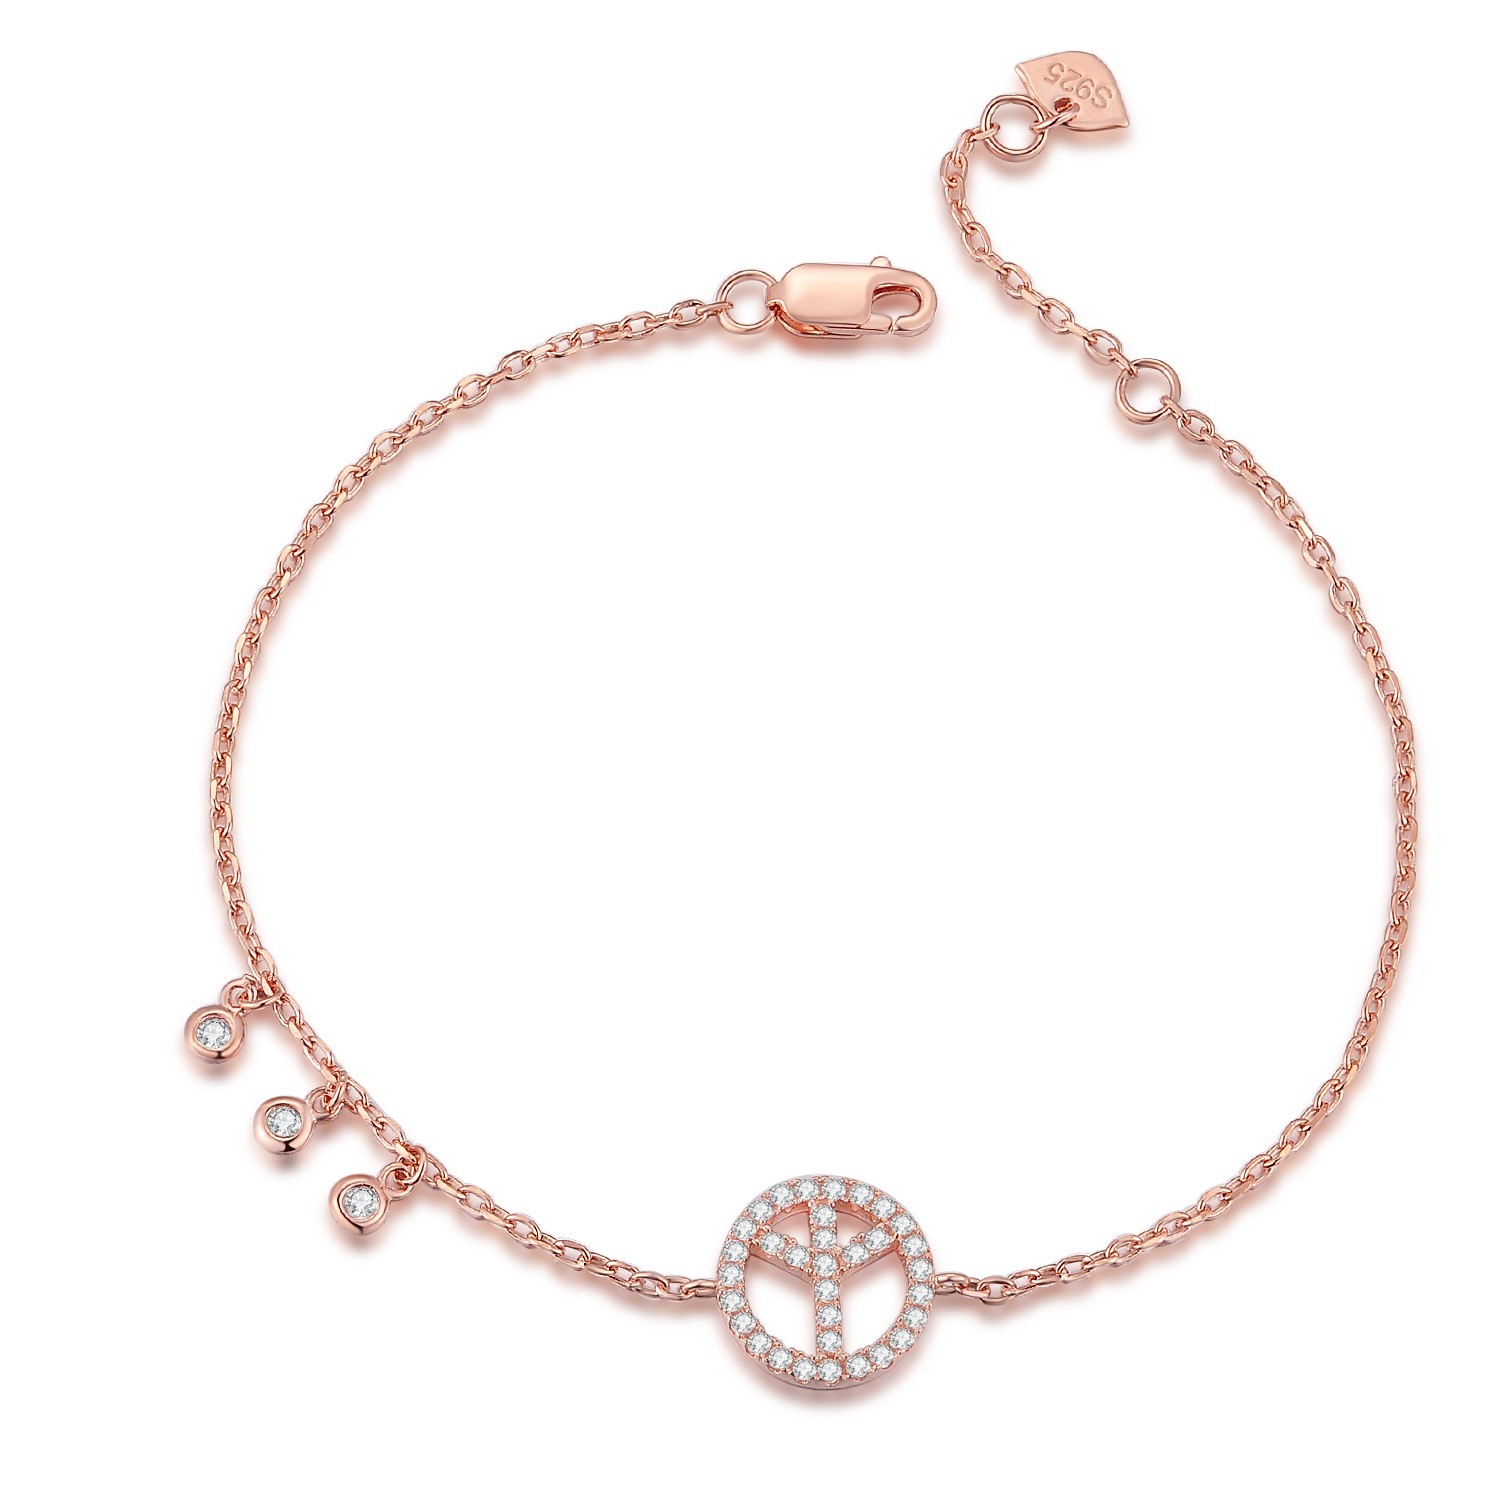  925 sterling silver rose gold tree bracelet cubic zirconia pendant custom charm women